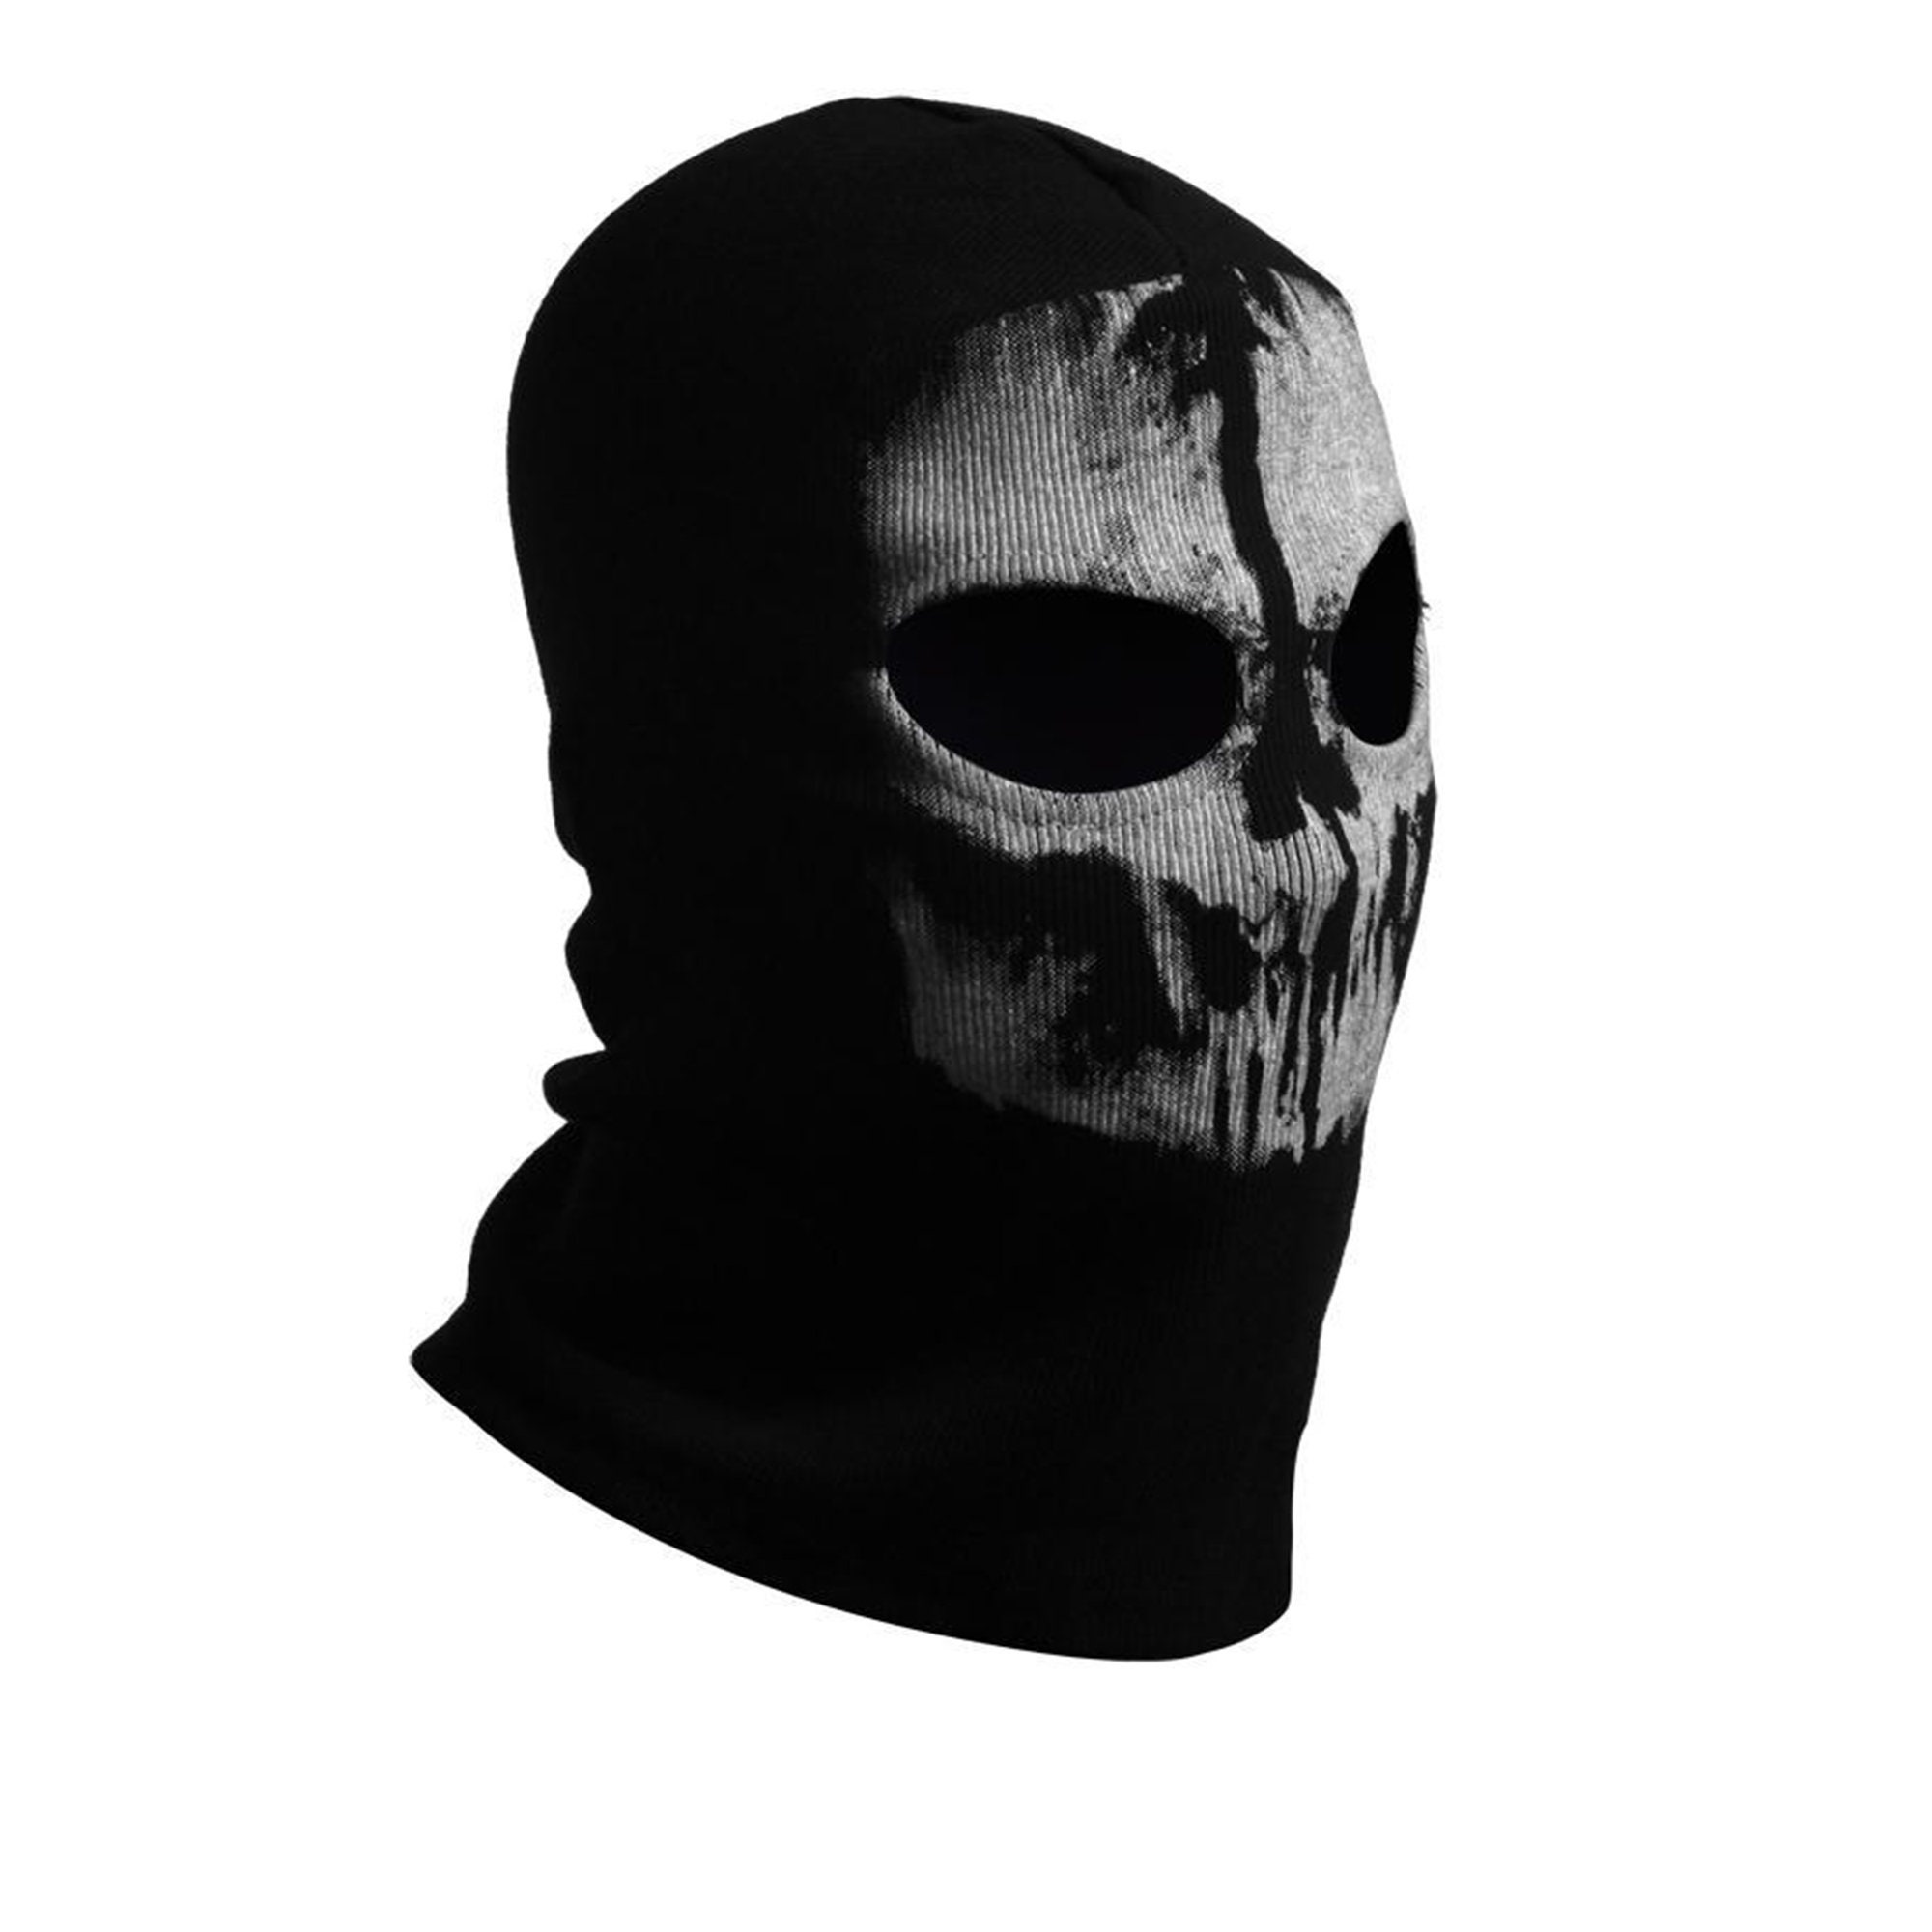 SINSEN COD Ghost Mask Skull Balaclava MW2 Skeleton Costume Full